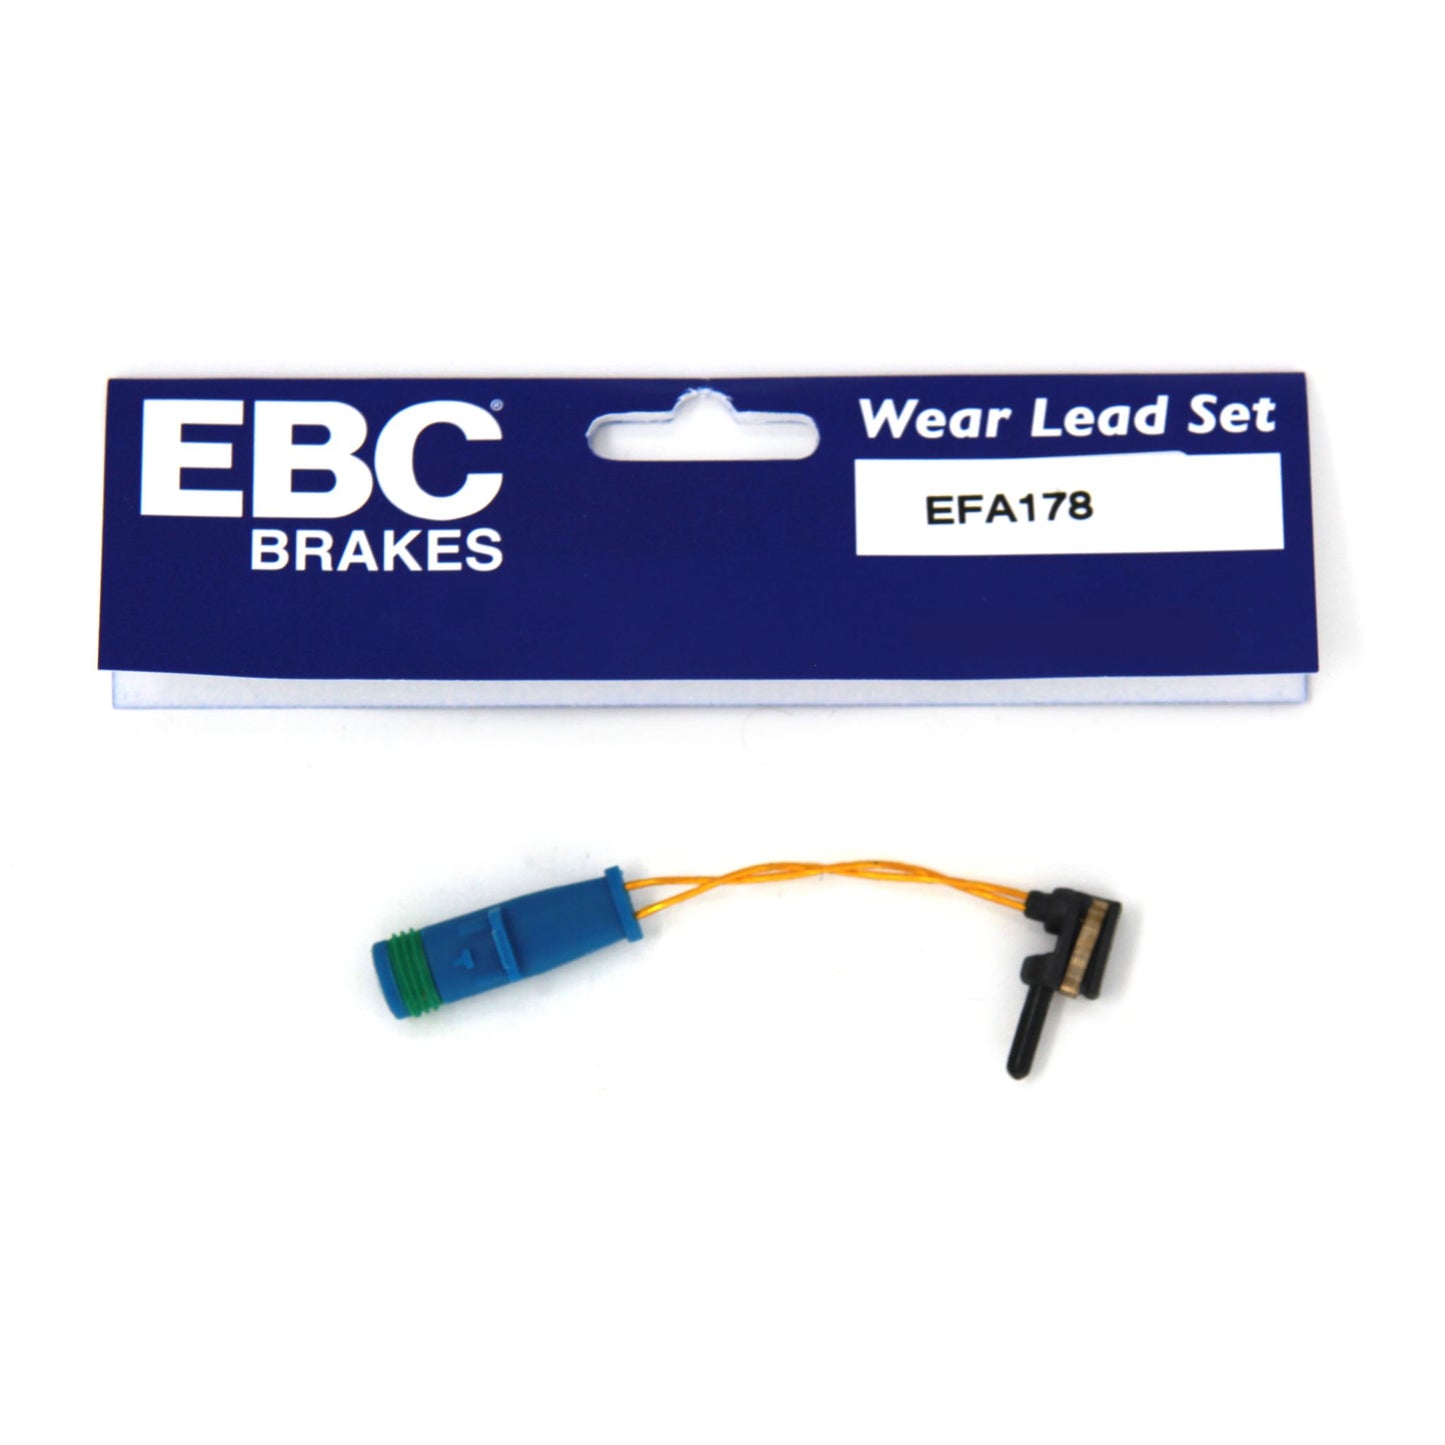 EBC EFA178 Brake Wear Lead Sensor Kit